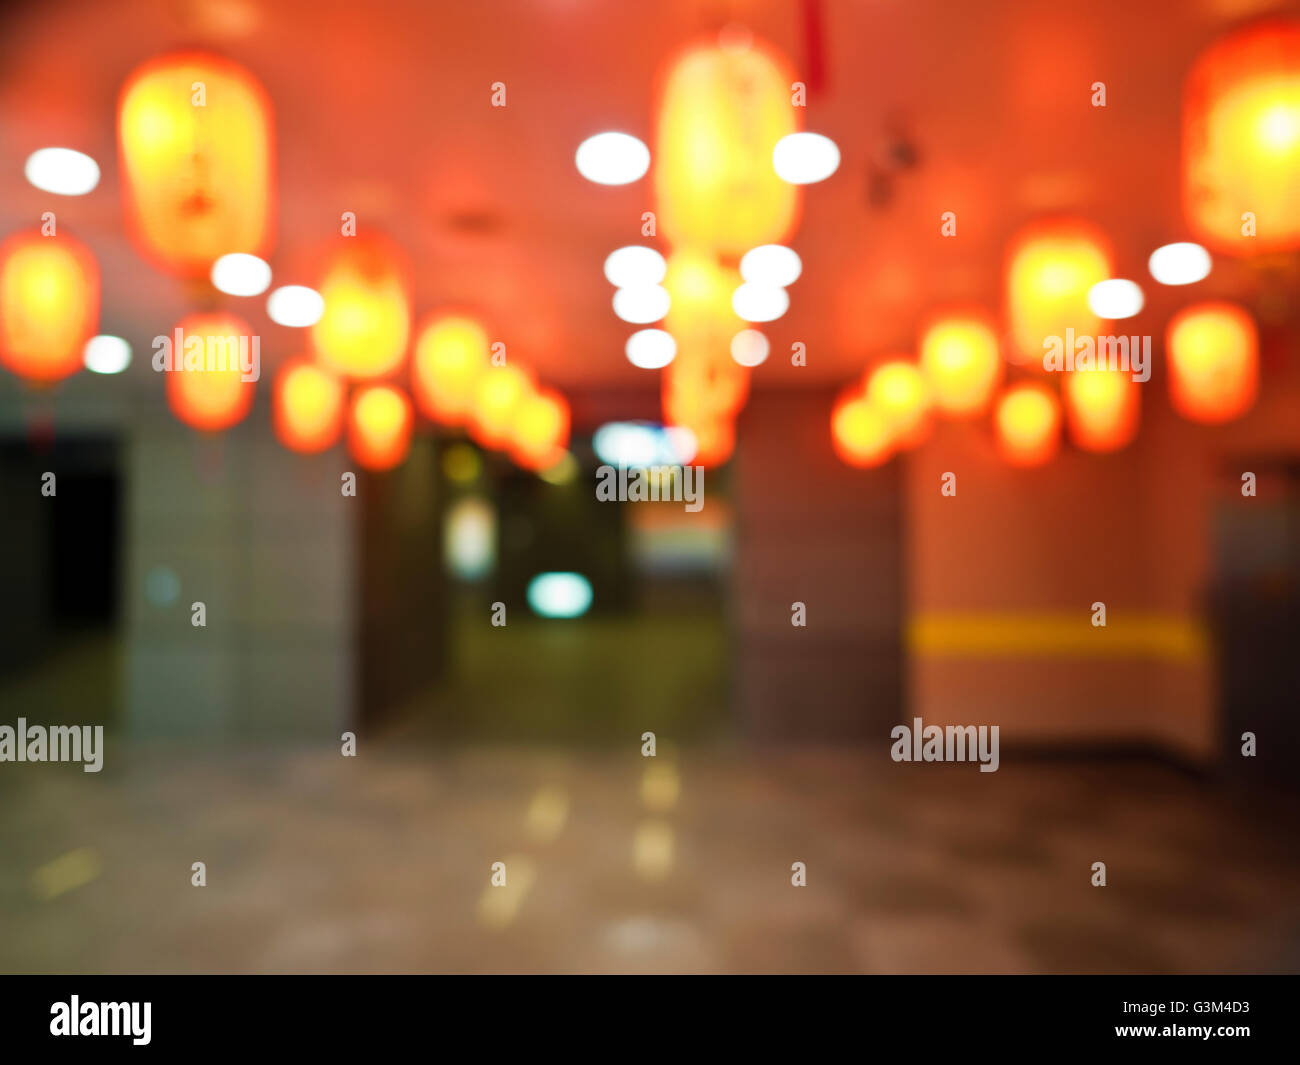 Blur corridor with bokeh background Stock Photo